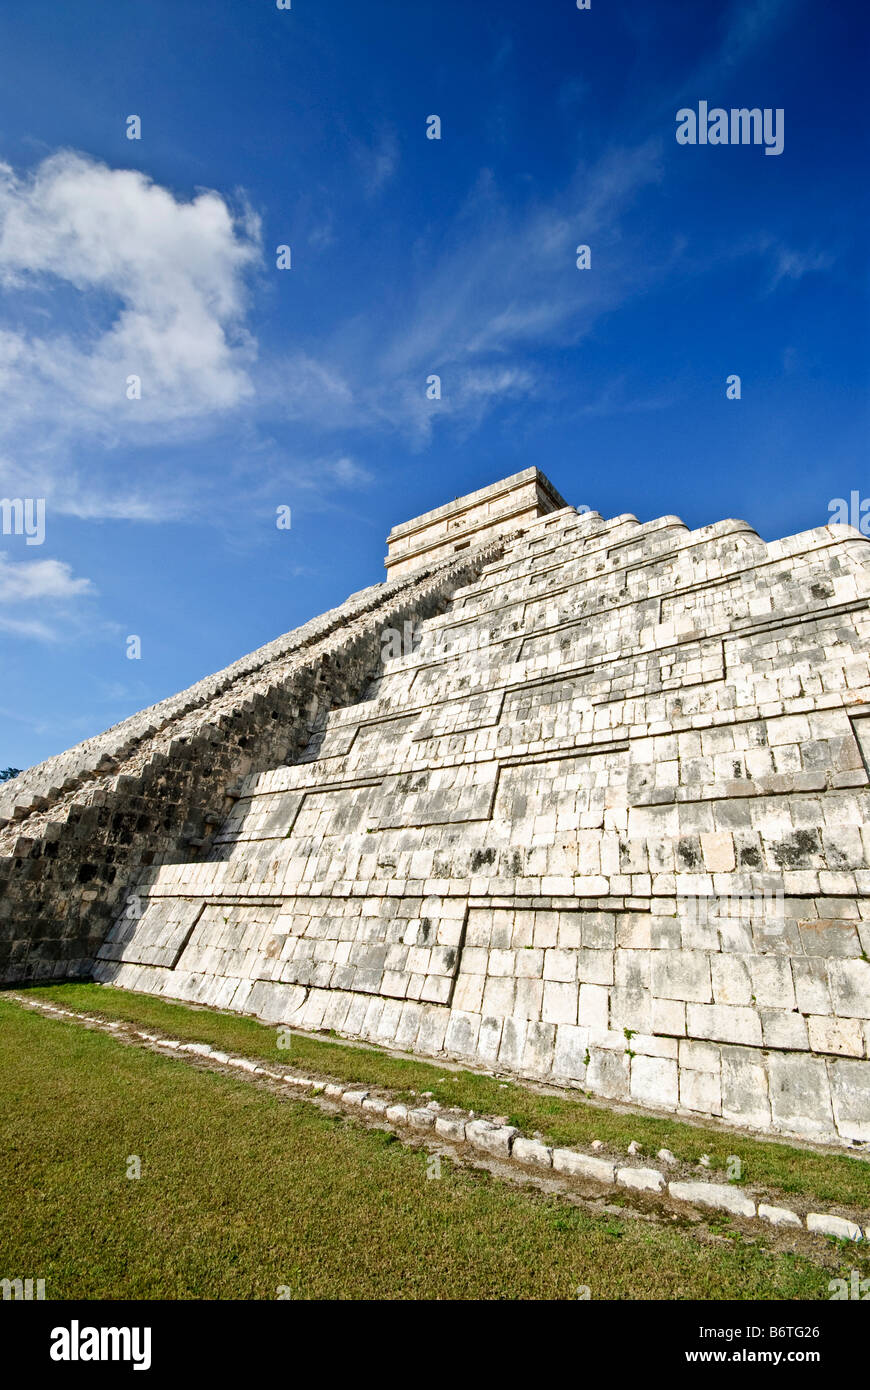 CHICHEN ITZA, Mexico - El Castillo (also known as Temple of Kuklcan) at the ancient Mayan ruins at Chichen Itza, Yucatan, Mexico 081216092726 1919x.tif Stock Photo